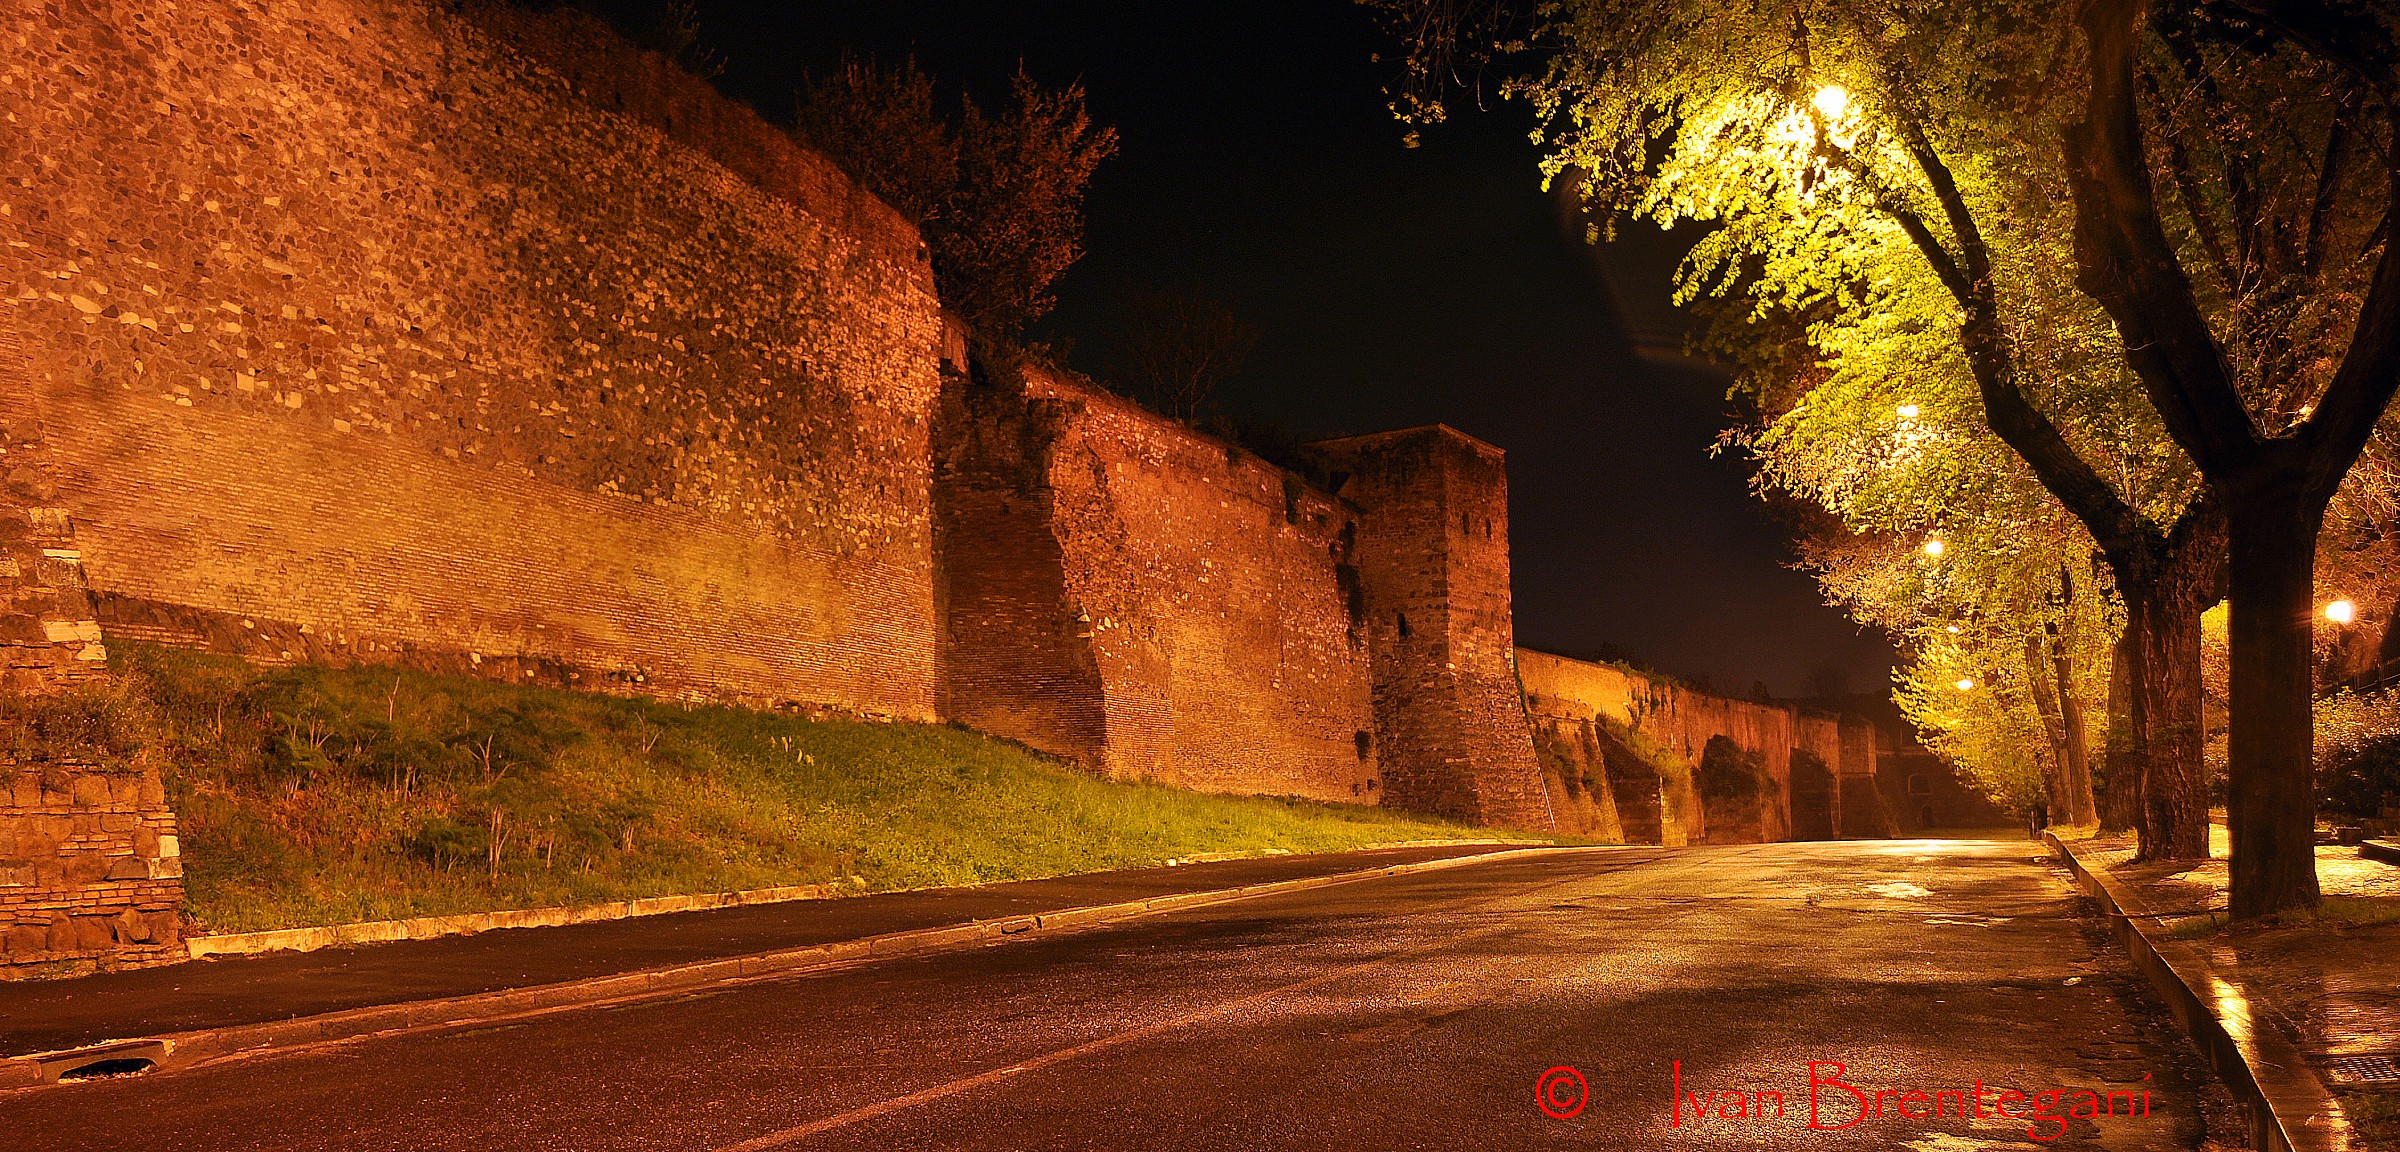 The old Roman walls near Porta Ardeatina...